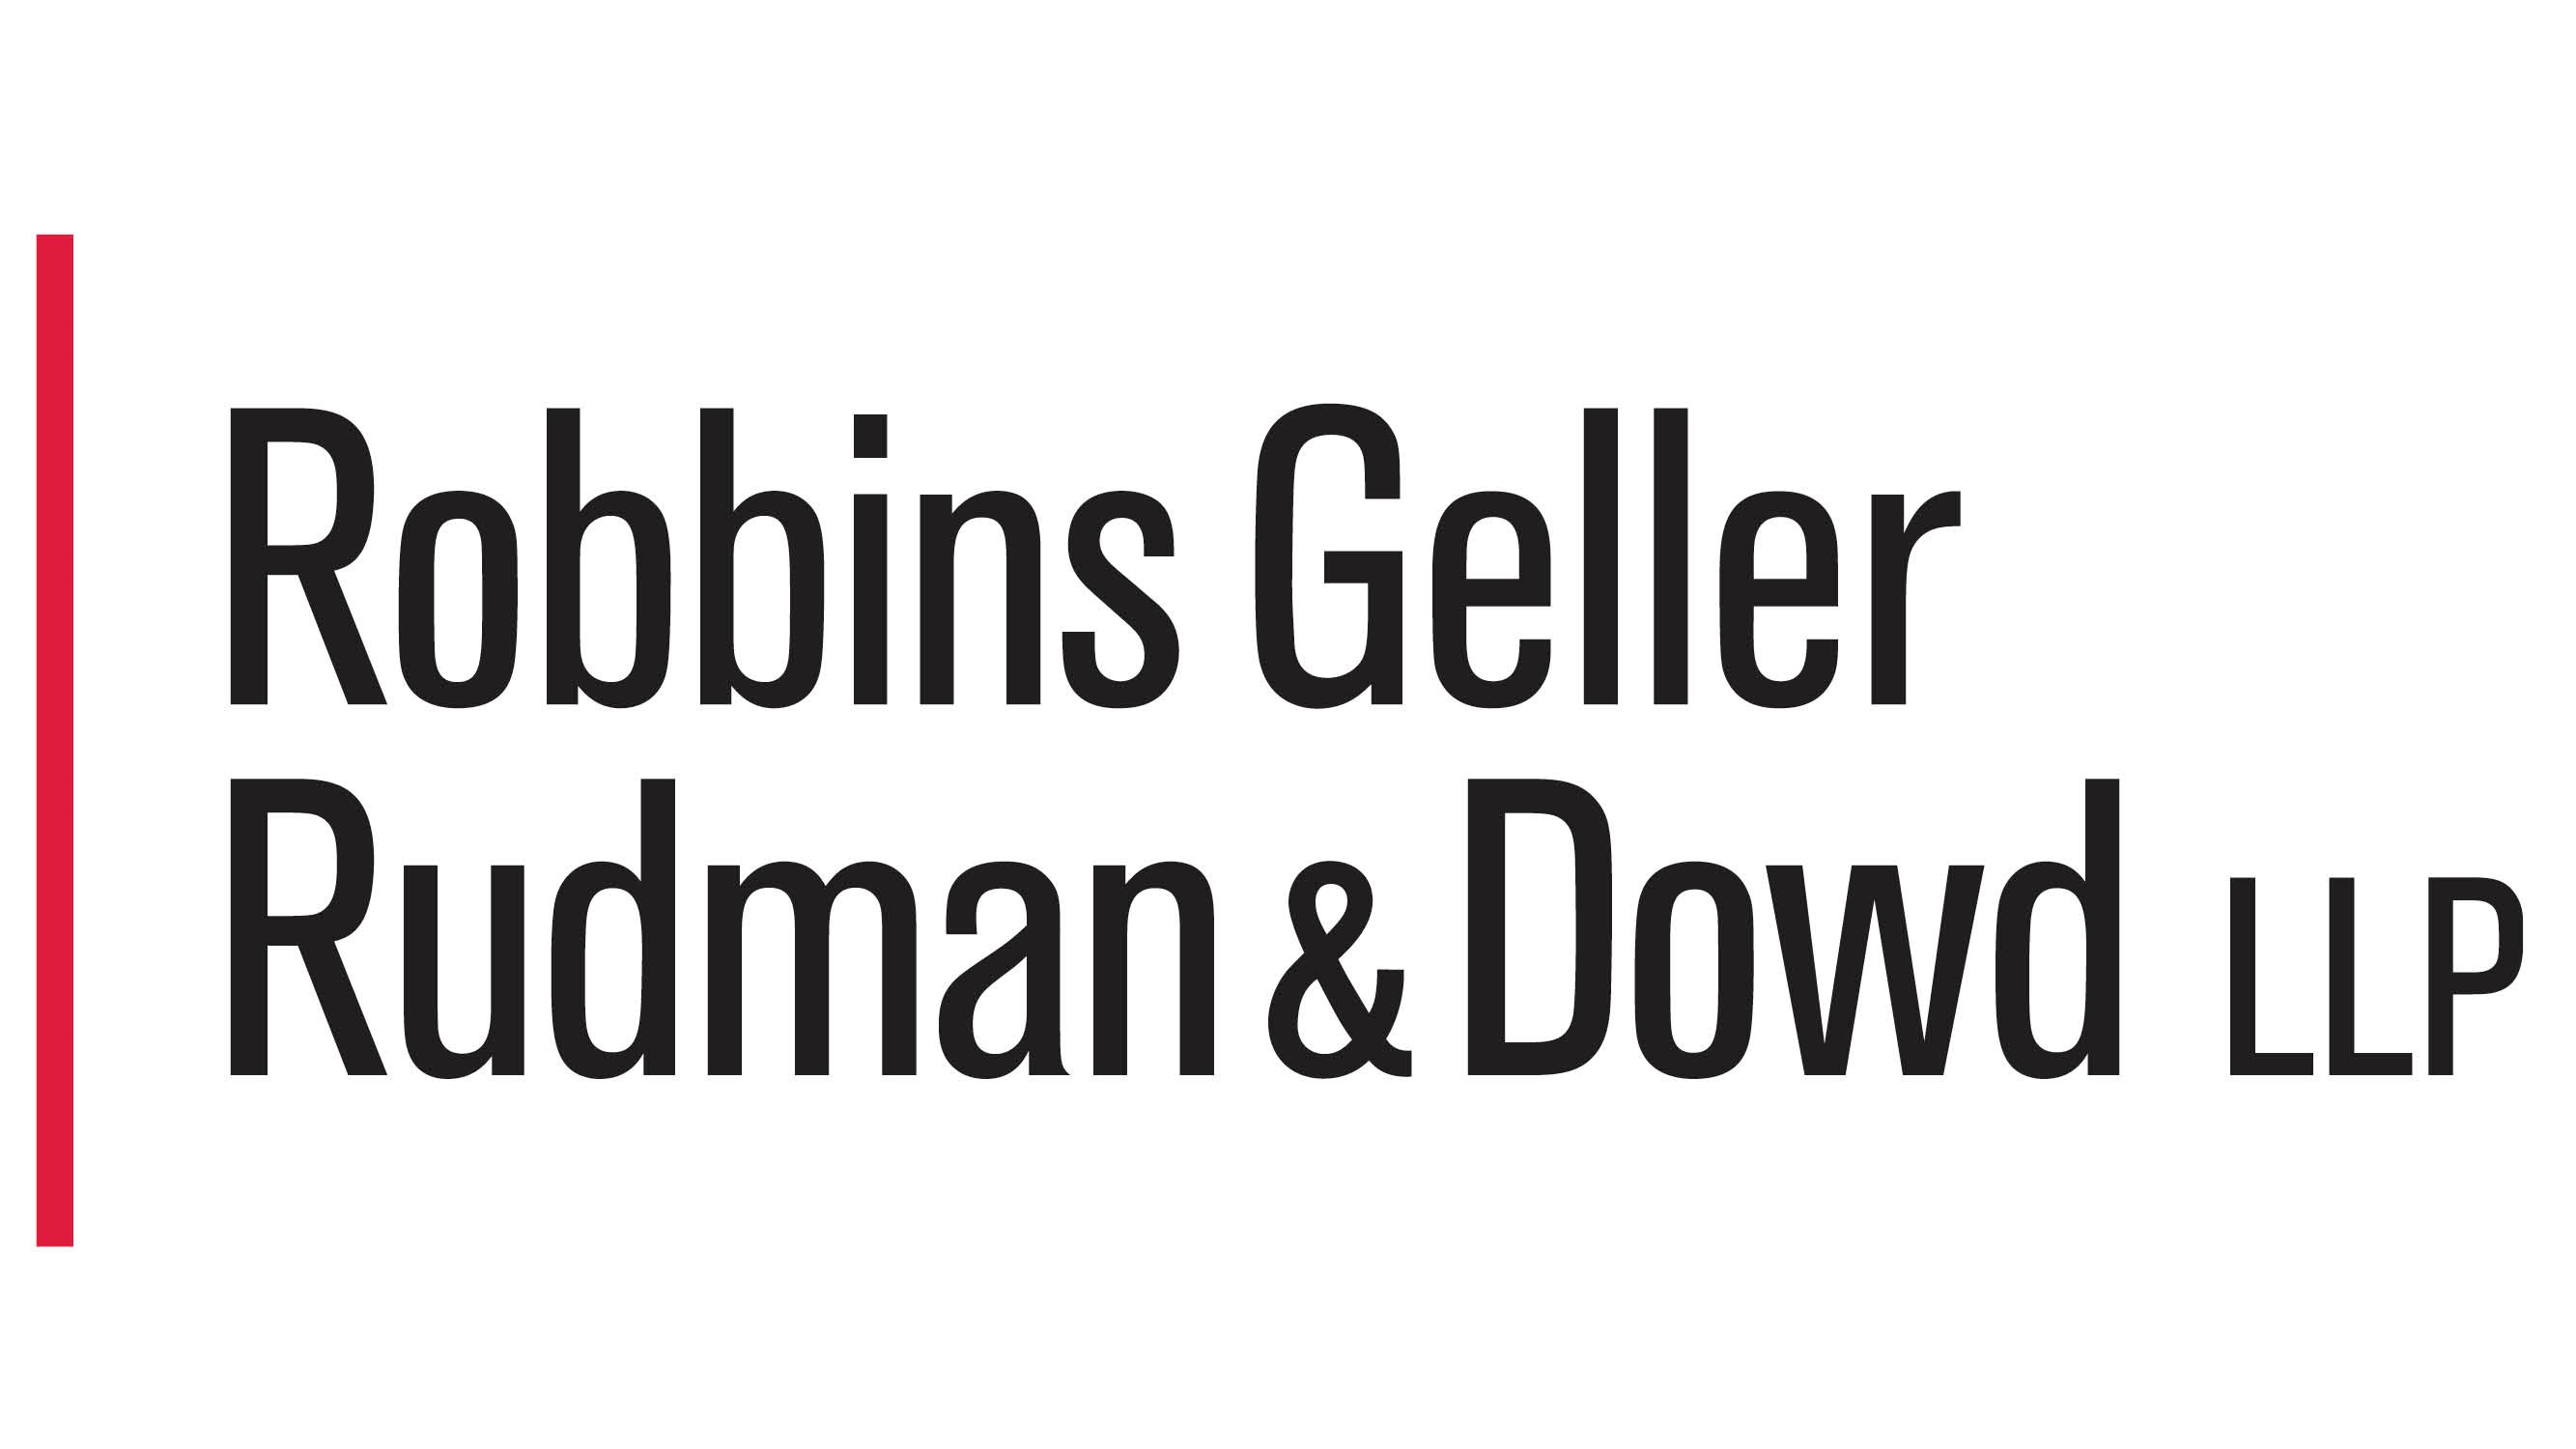 Robbins Geller Rudman & Dowd LLP, Wednesday, November 3, 2021, Press release picture